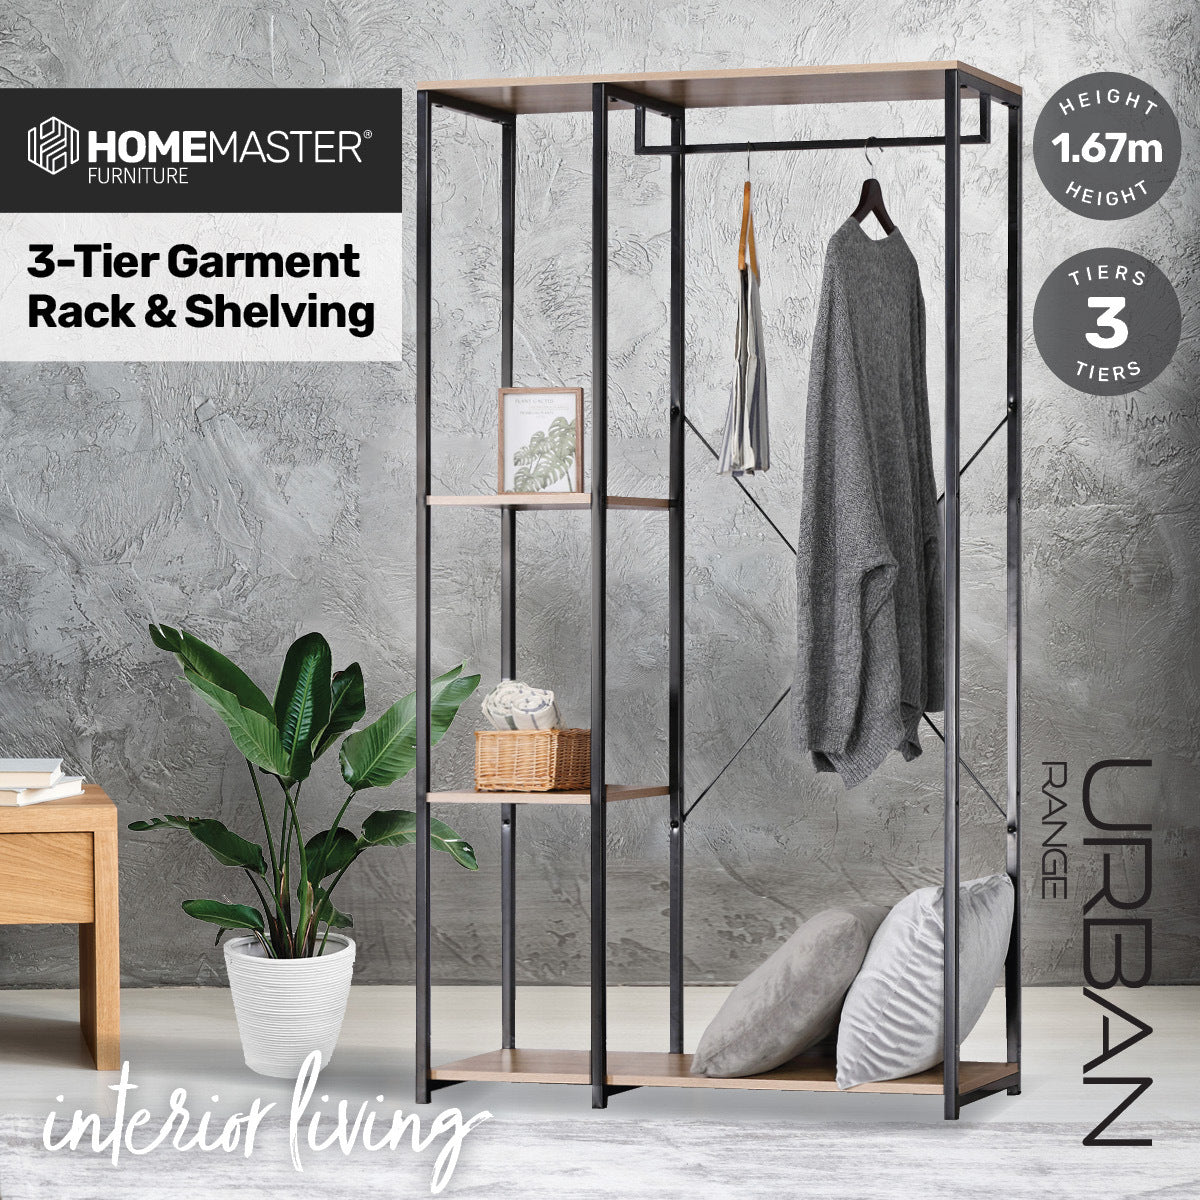 Home Master Garment Rack & Shelving 3 Tier Sleek Stylish Modern Design 1.67m Deals499